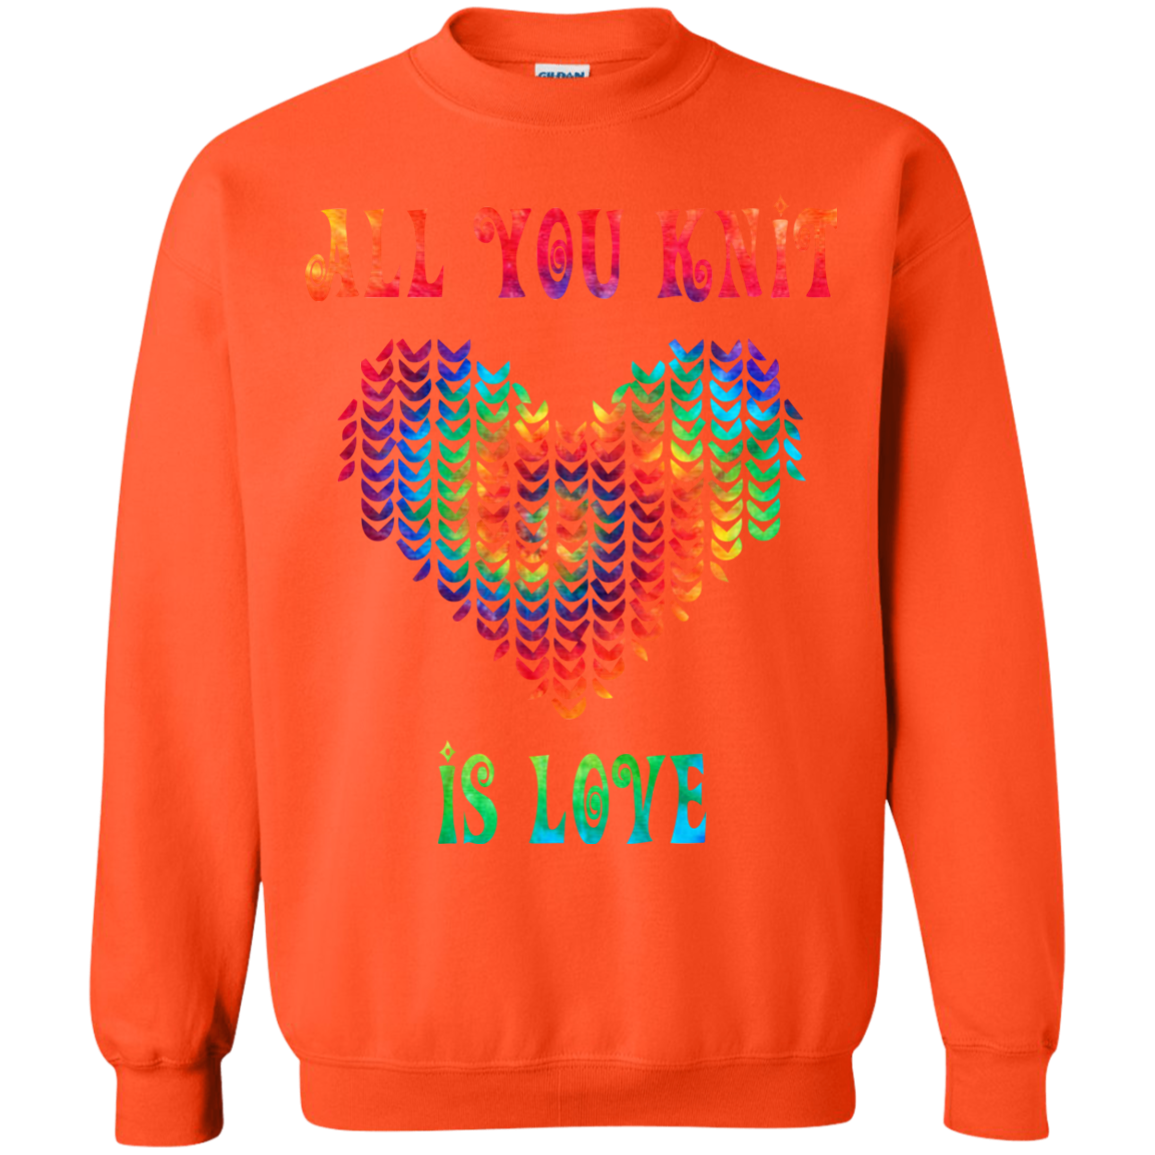 All You Knit Heart Crewneck Pullover Sweatshirt